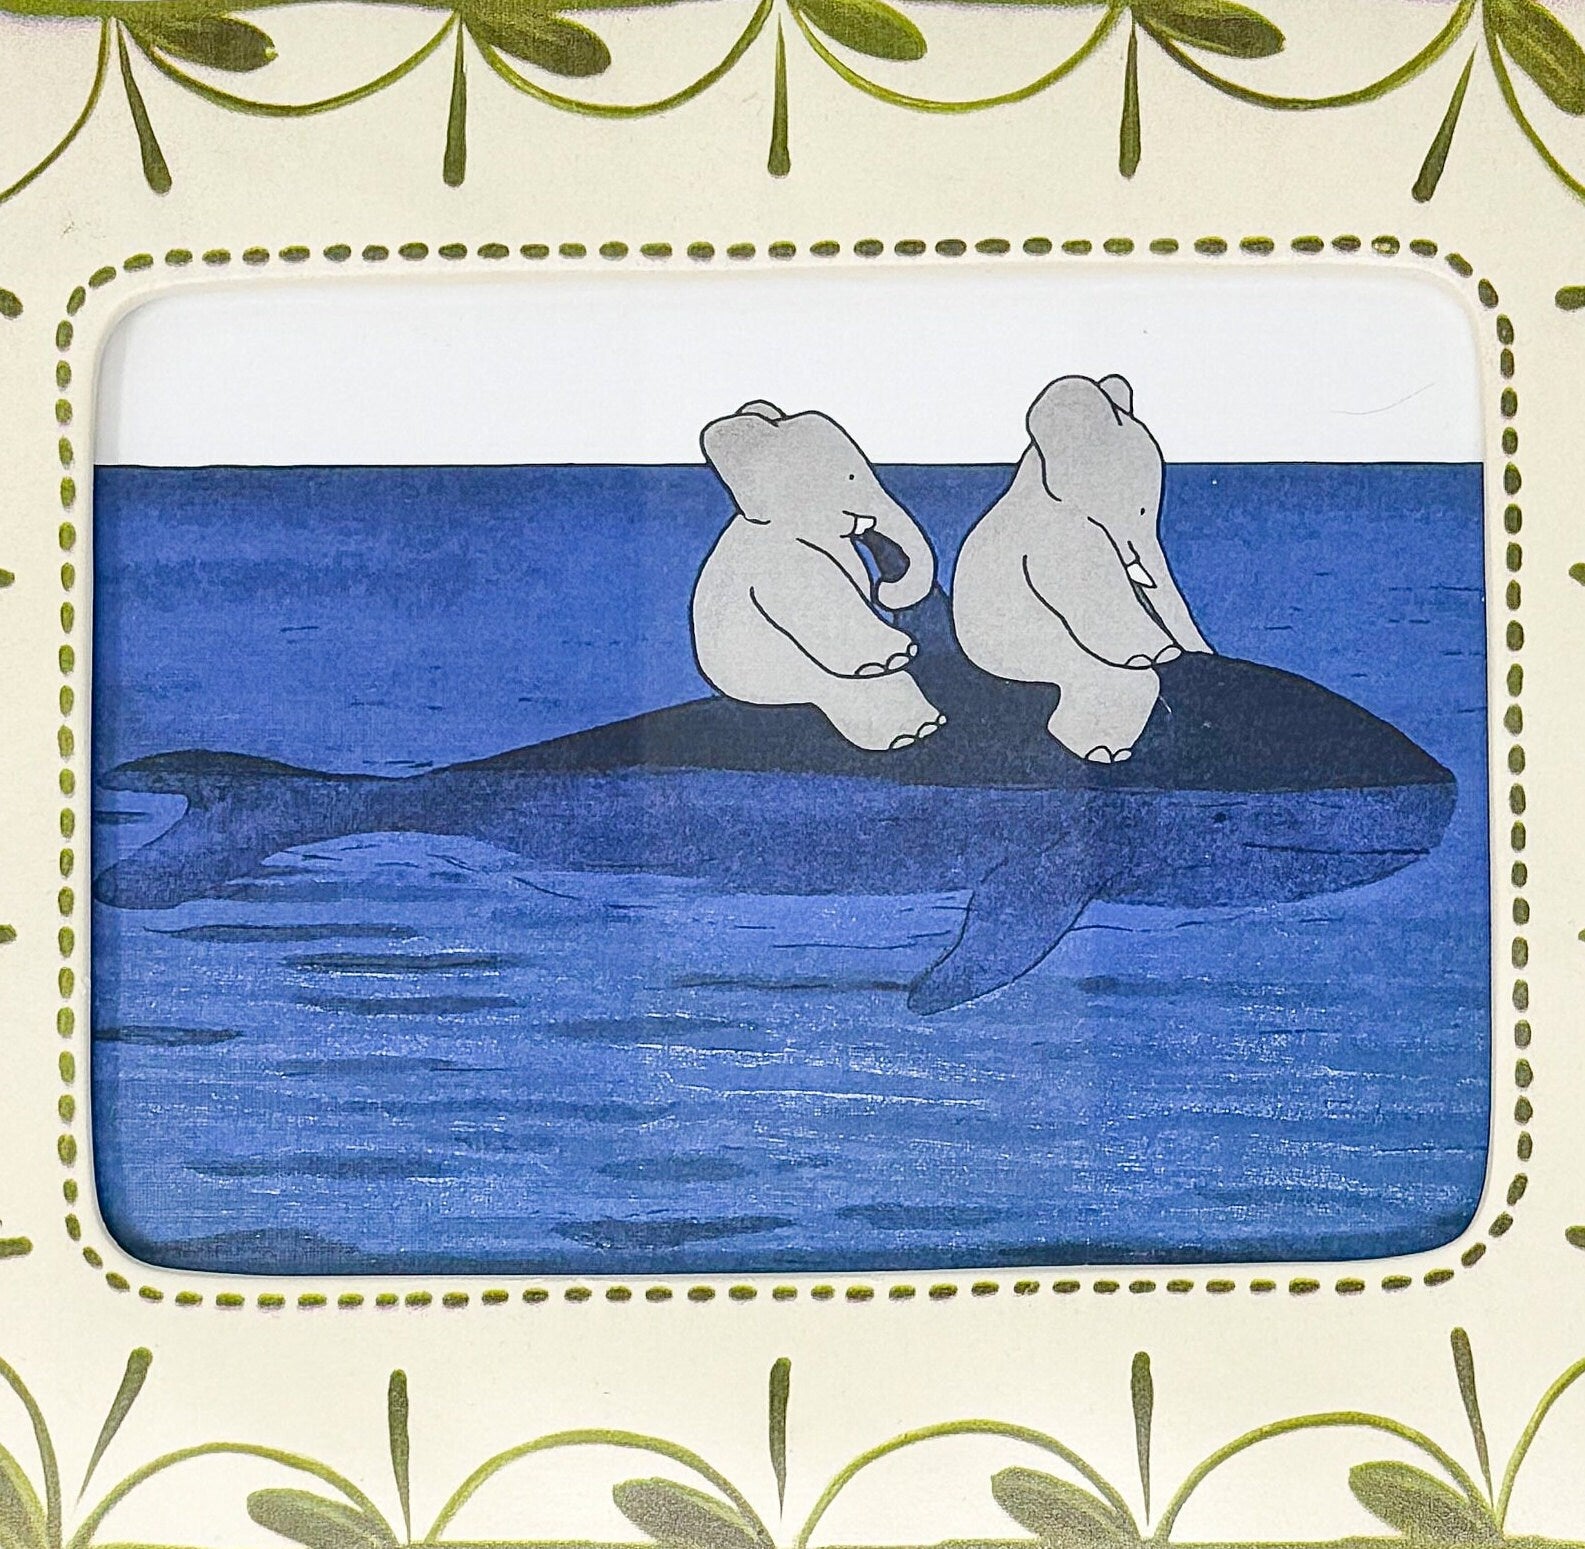 Framed Vintage Babar the Elephant Whale Print - 5x7"